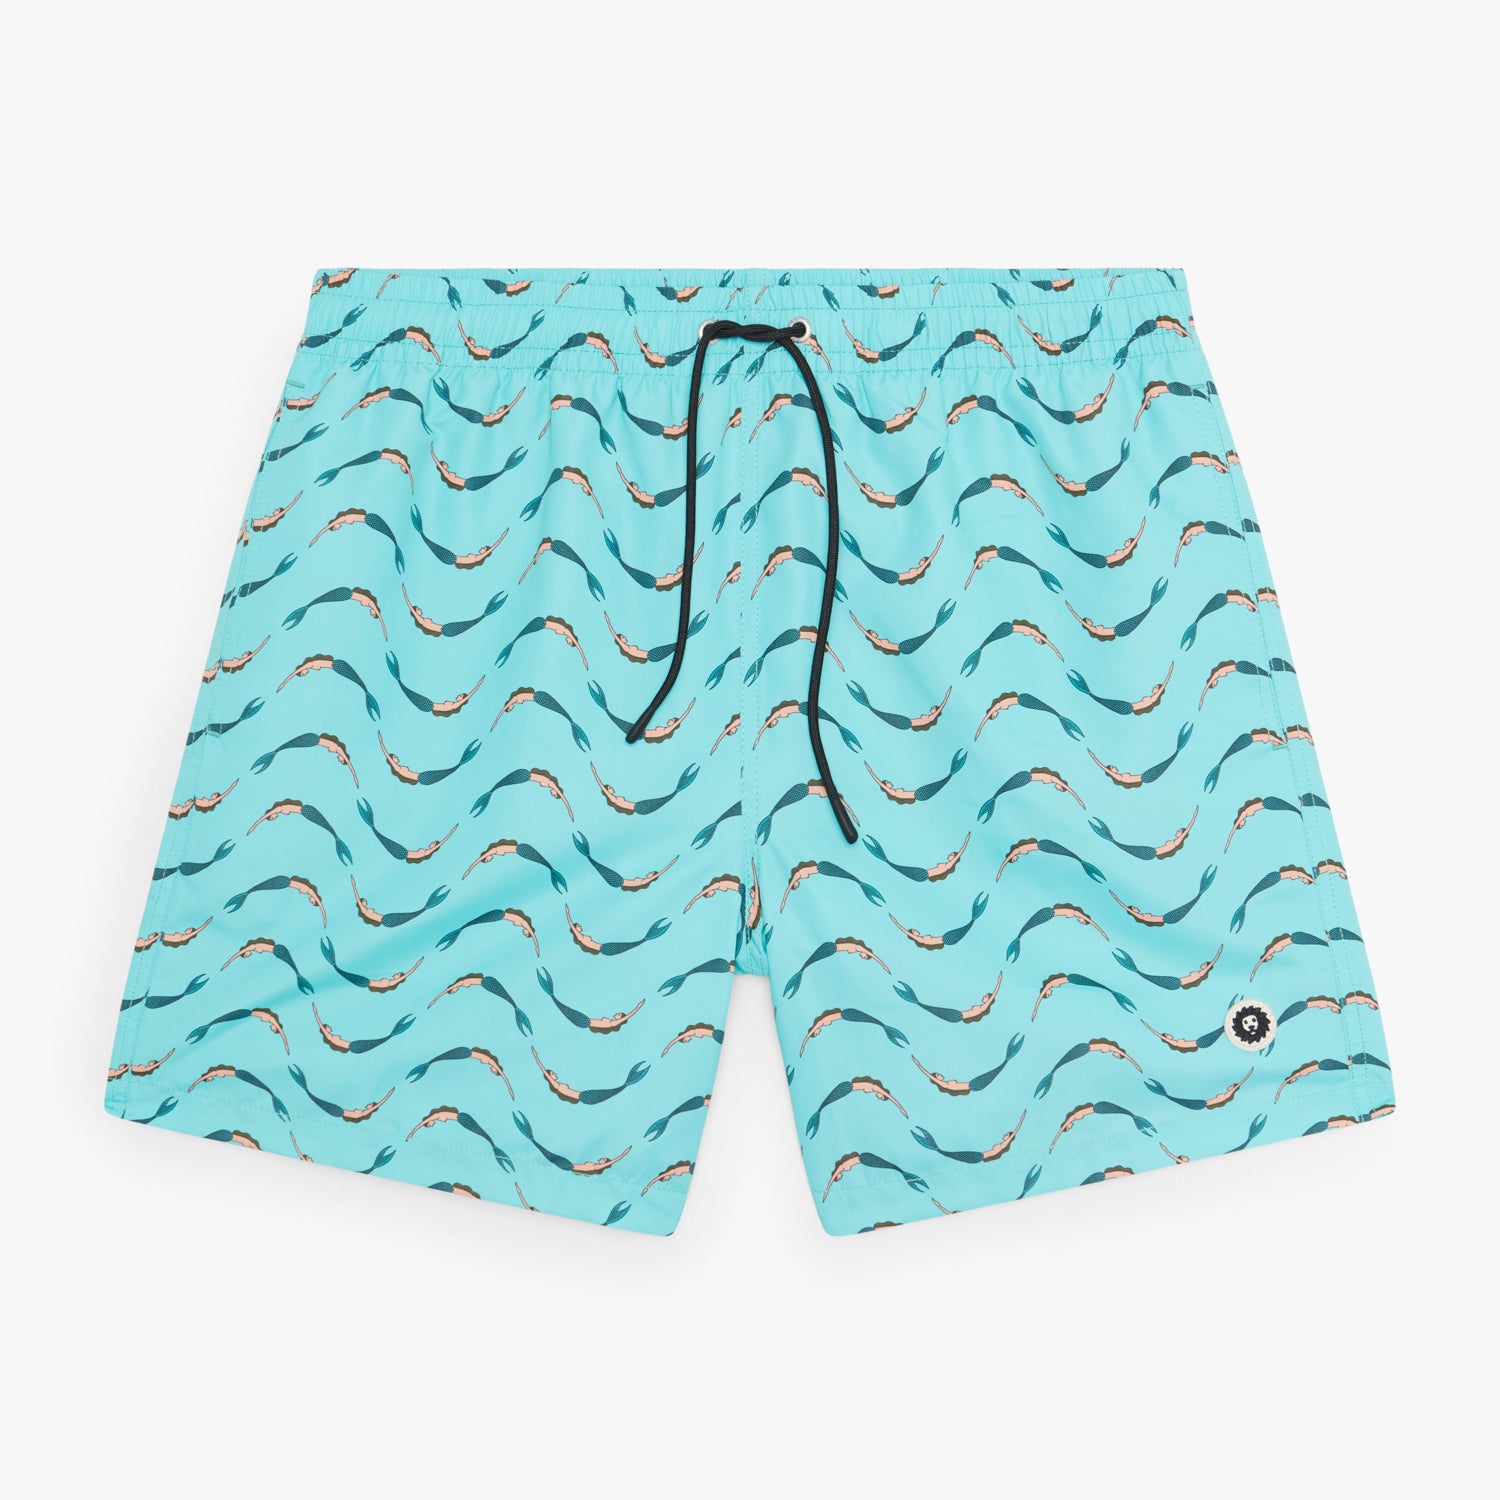 Mermaids Swim Shorts - Turquoise